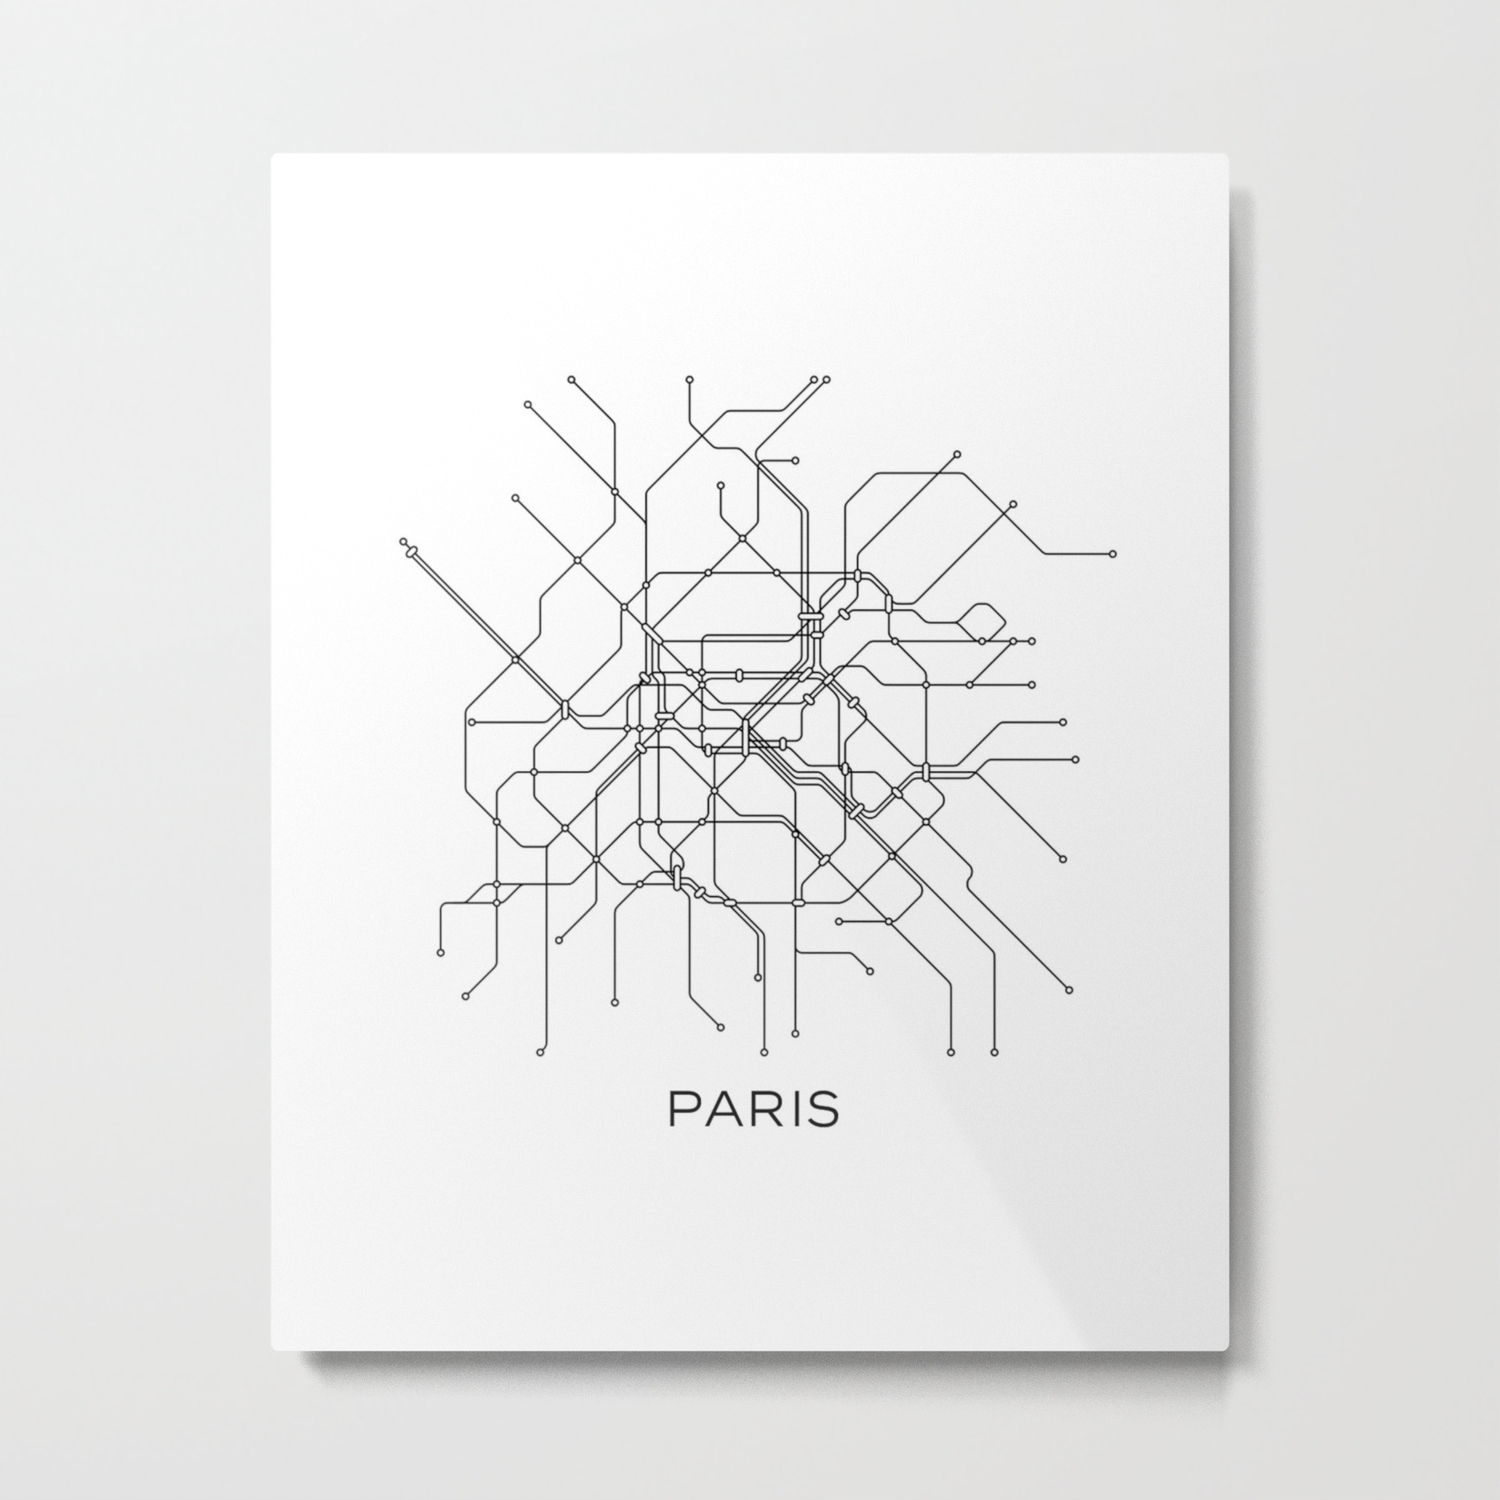 Paris Metro Map Subway Map Paris Metro Graphic Design Black And White Canvas Metropolian Art Metal Print By Printablelifestyle Society6